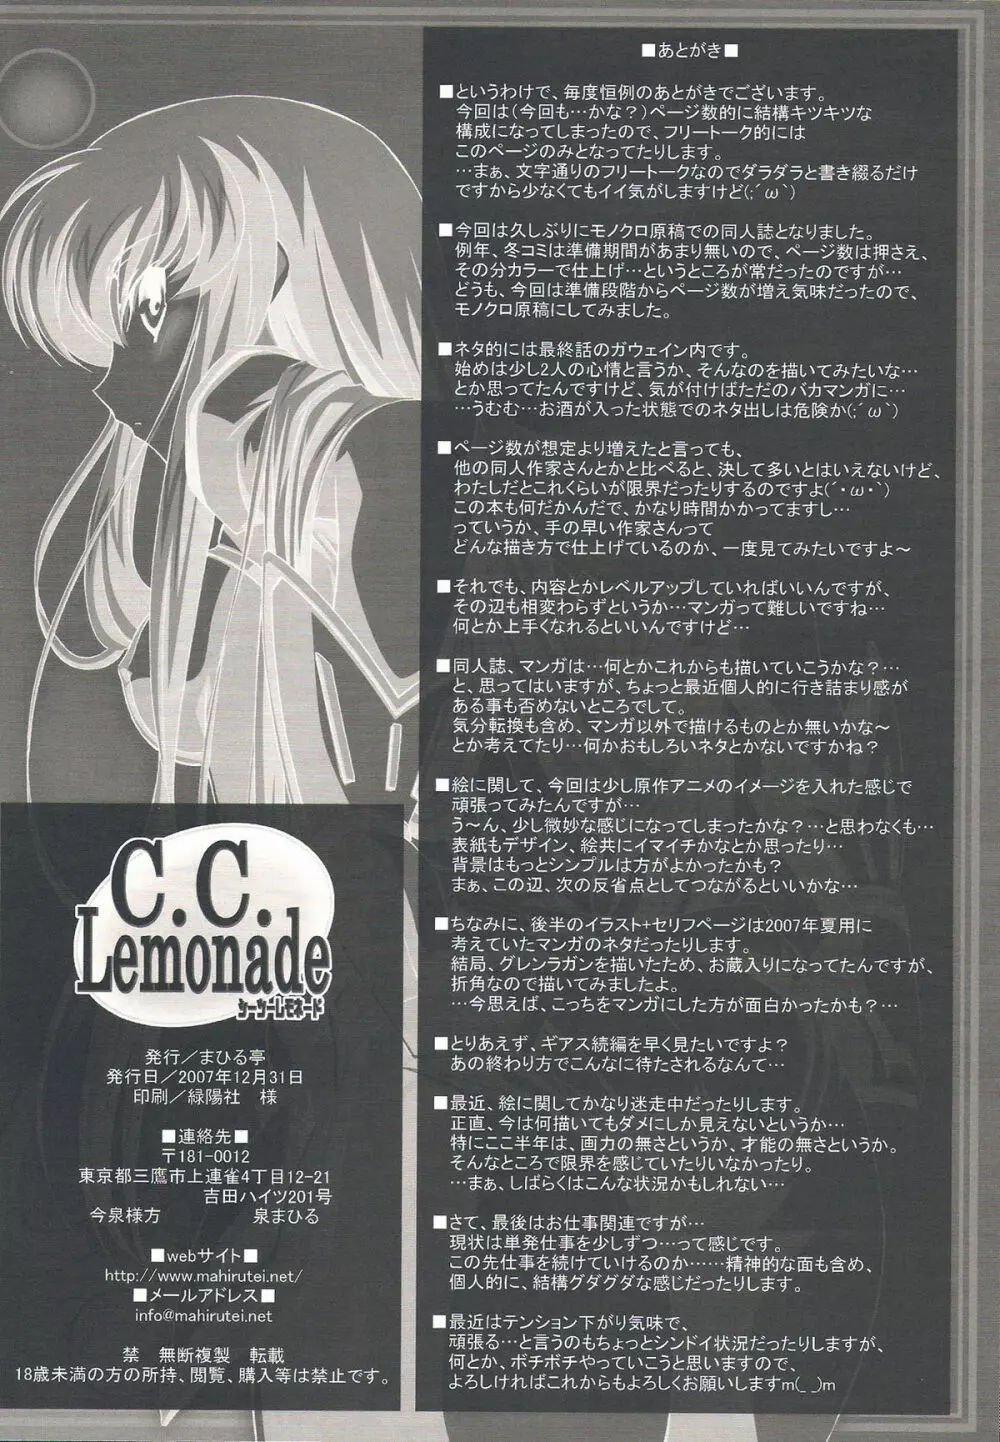 C.C. Lemonade シーツーレモネード 29ページ